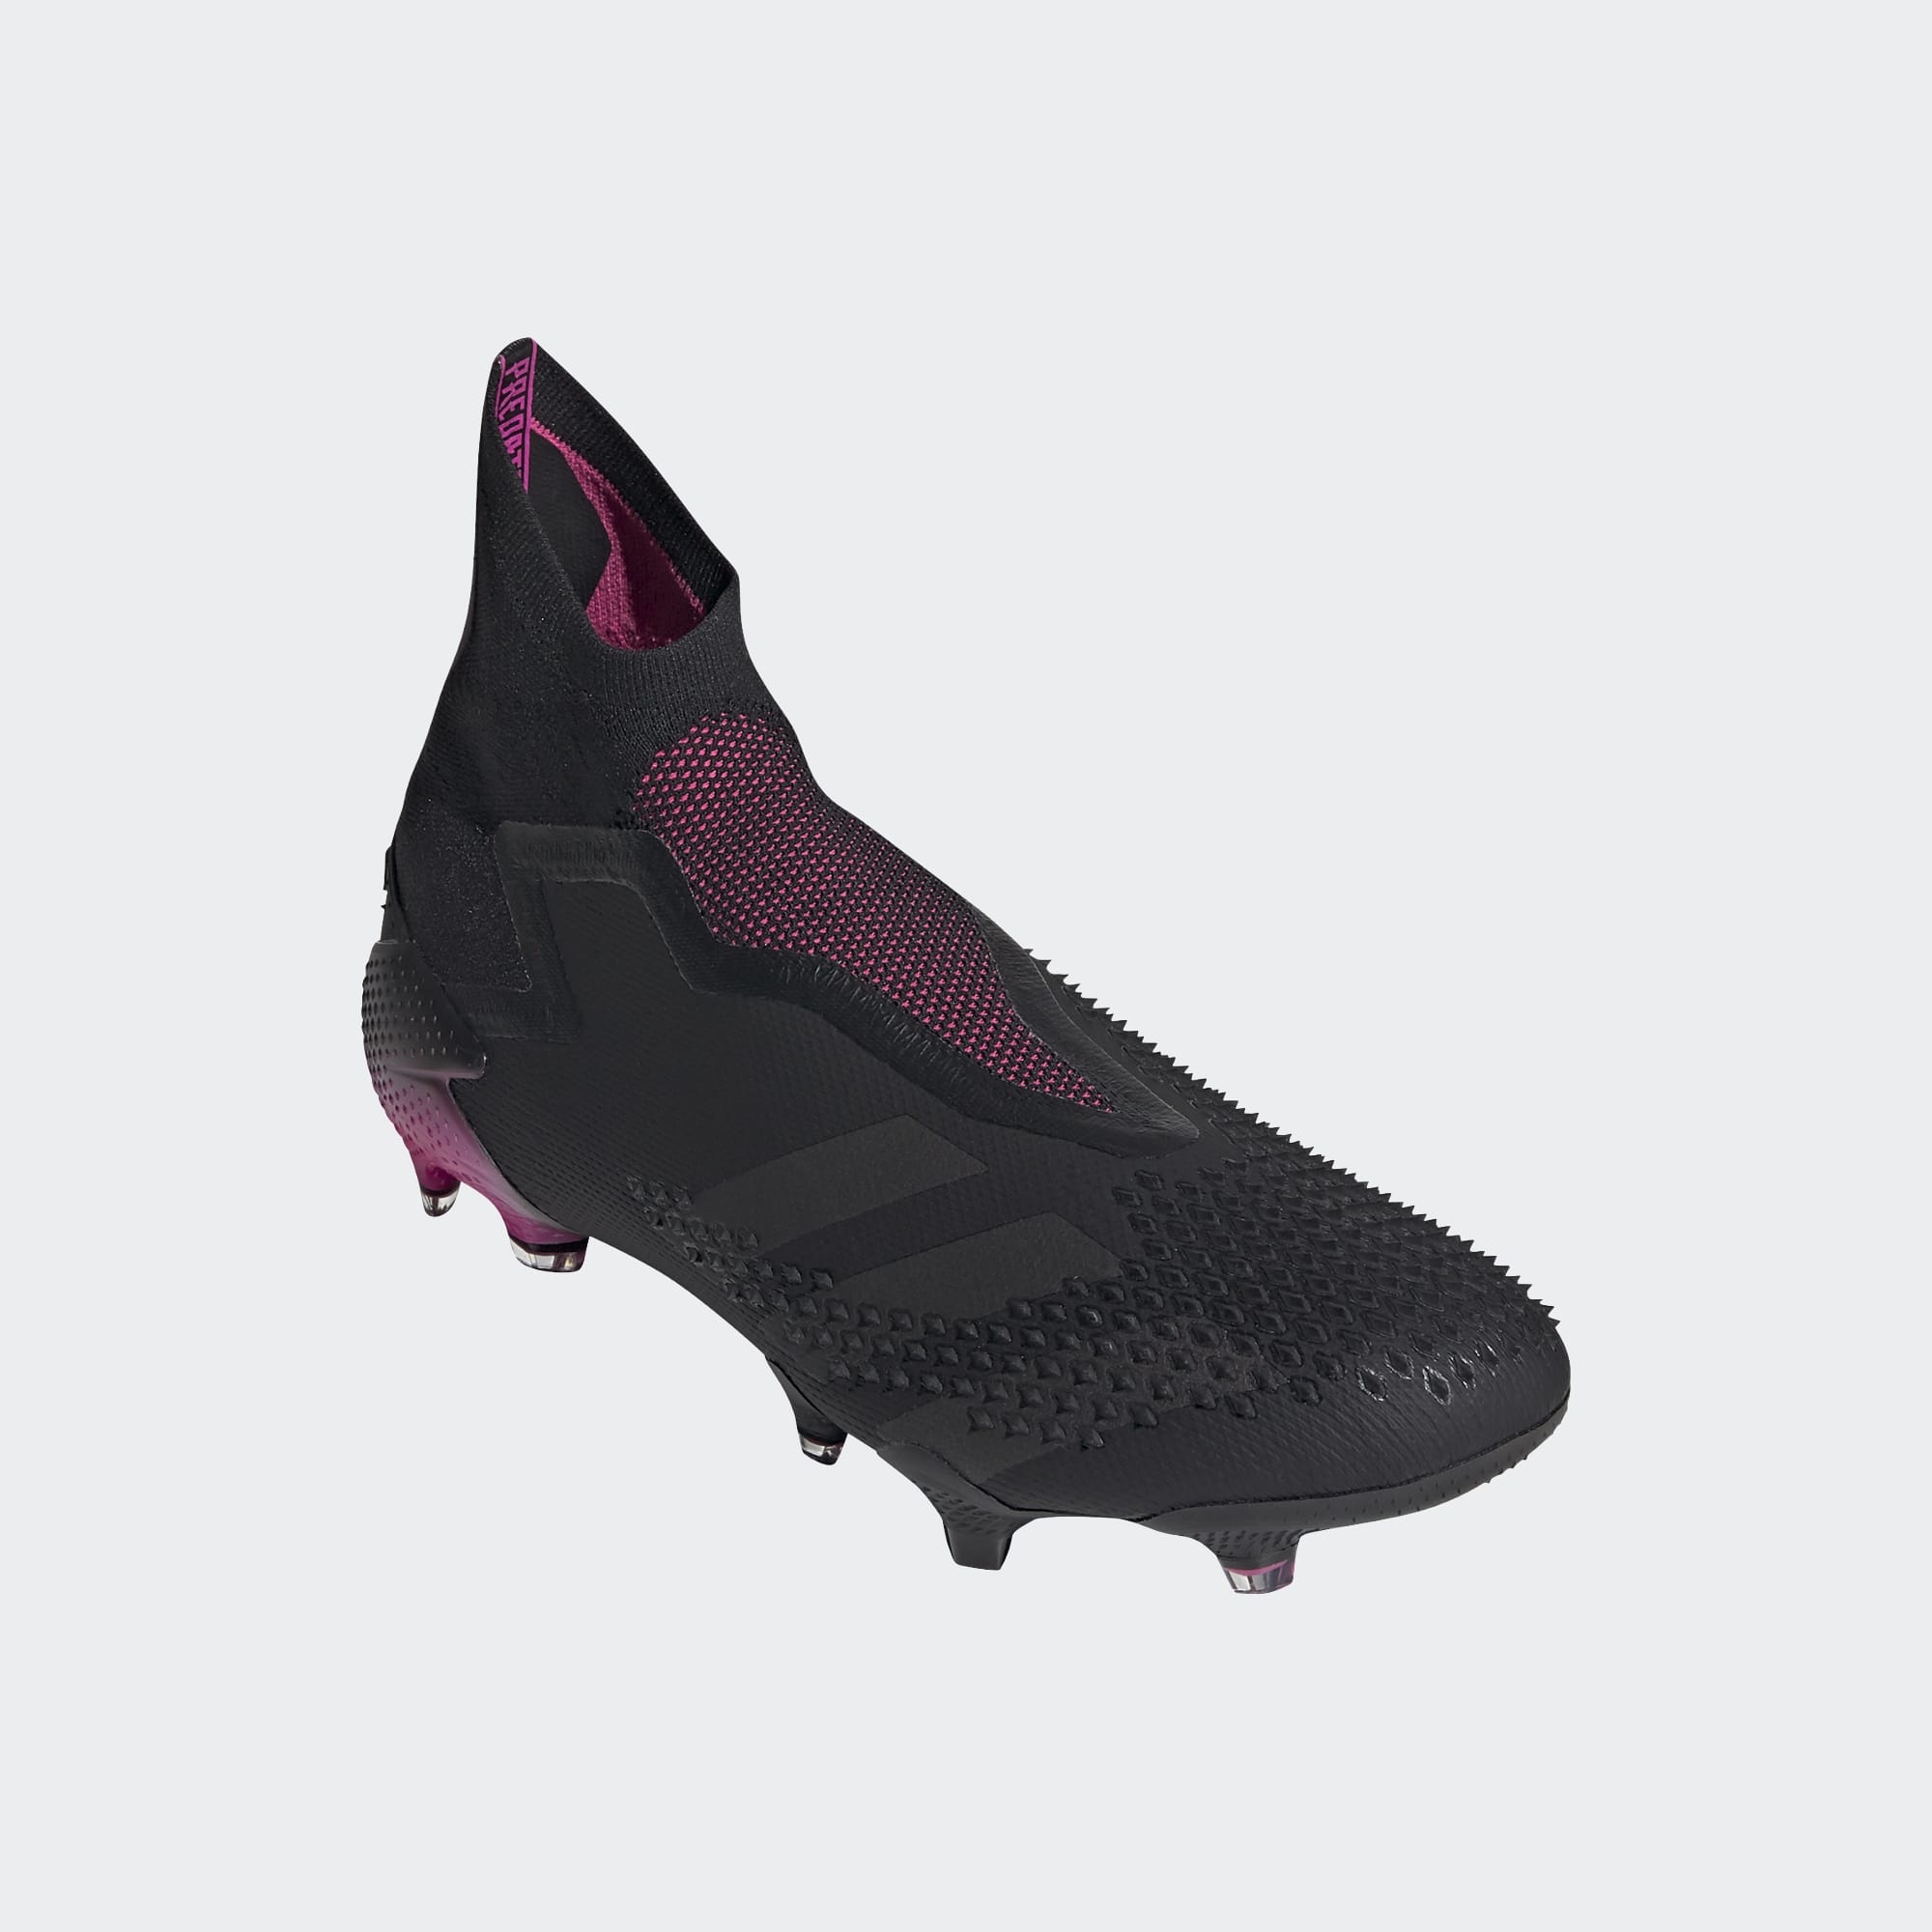 adidas predator mutator black and pink